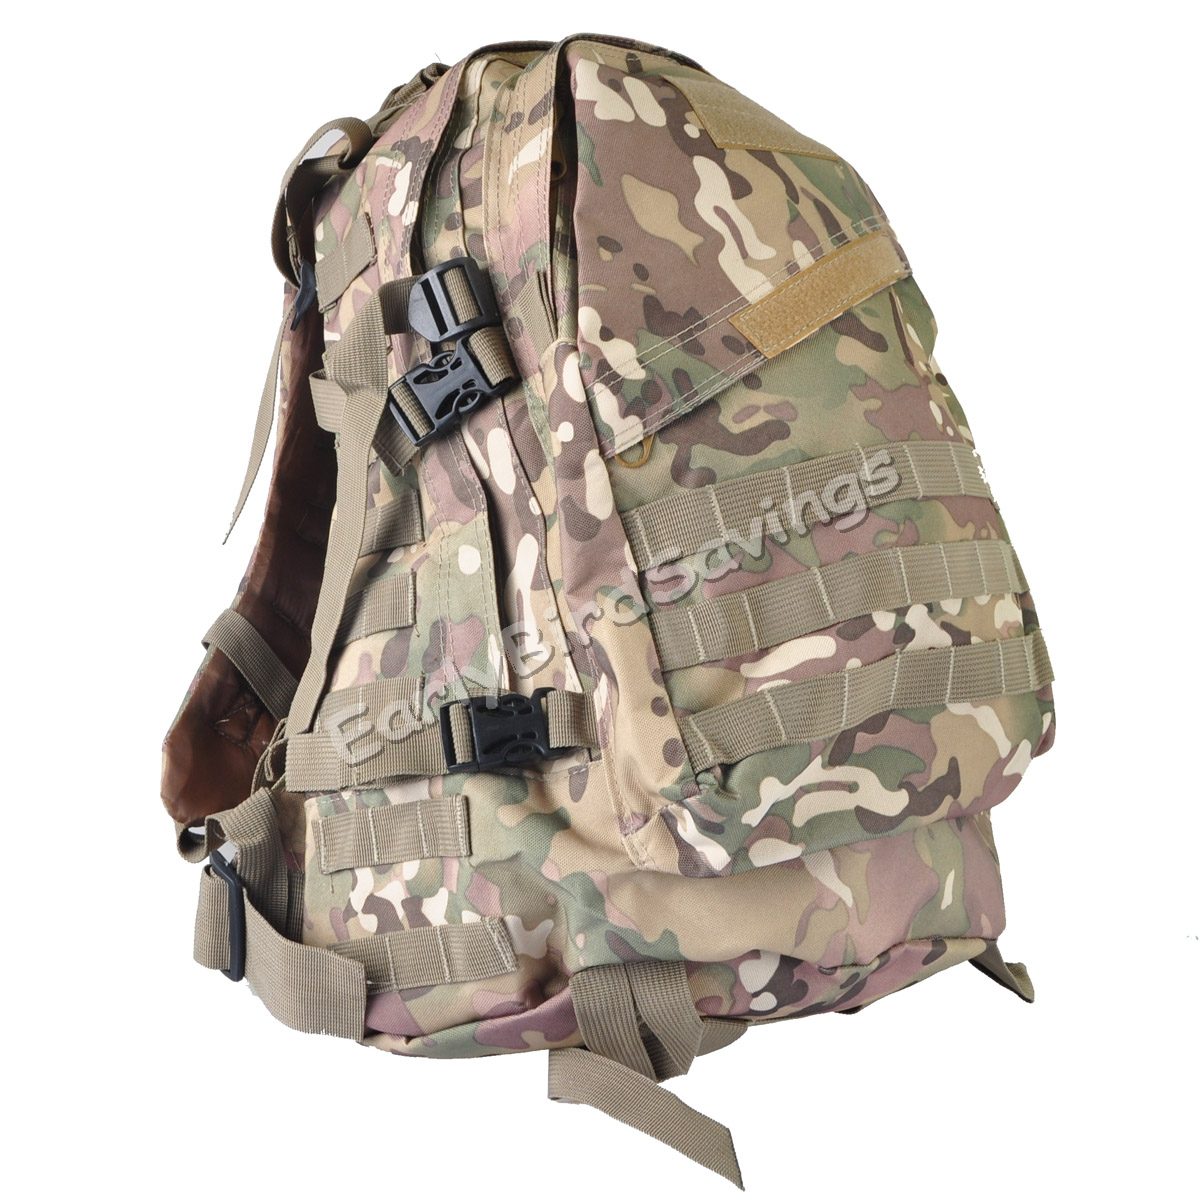 Military Rucksack Tactical Backpack Camping Hiking Trekking Bag Jpg